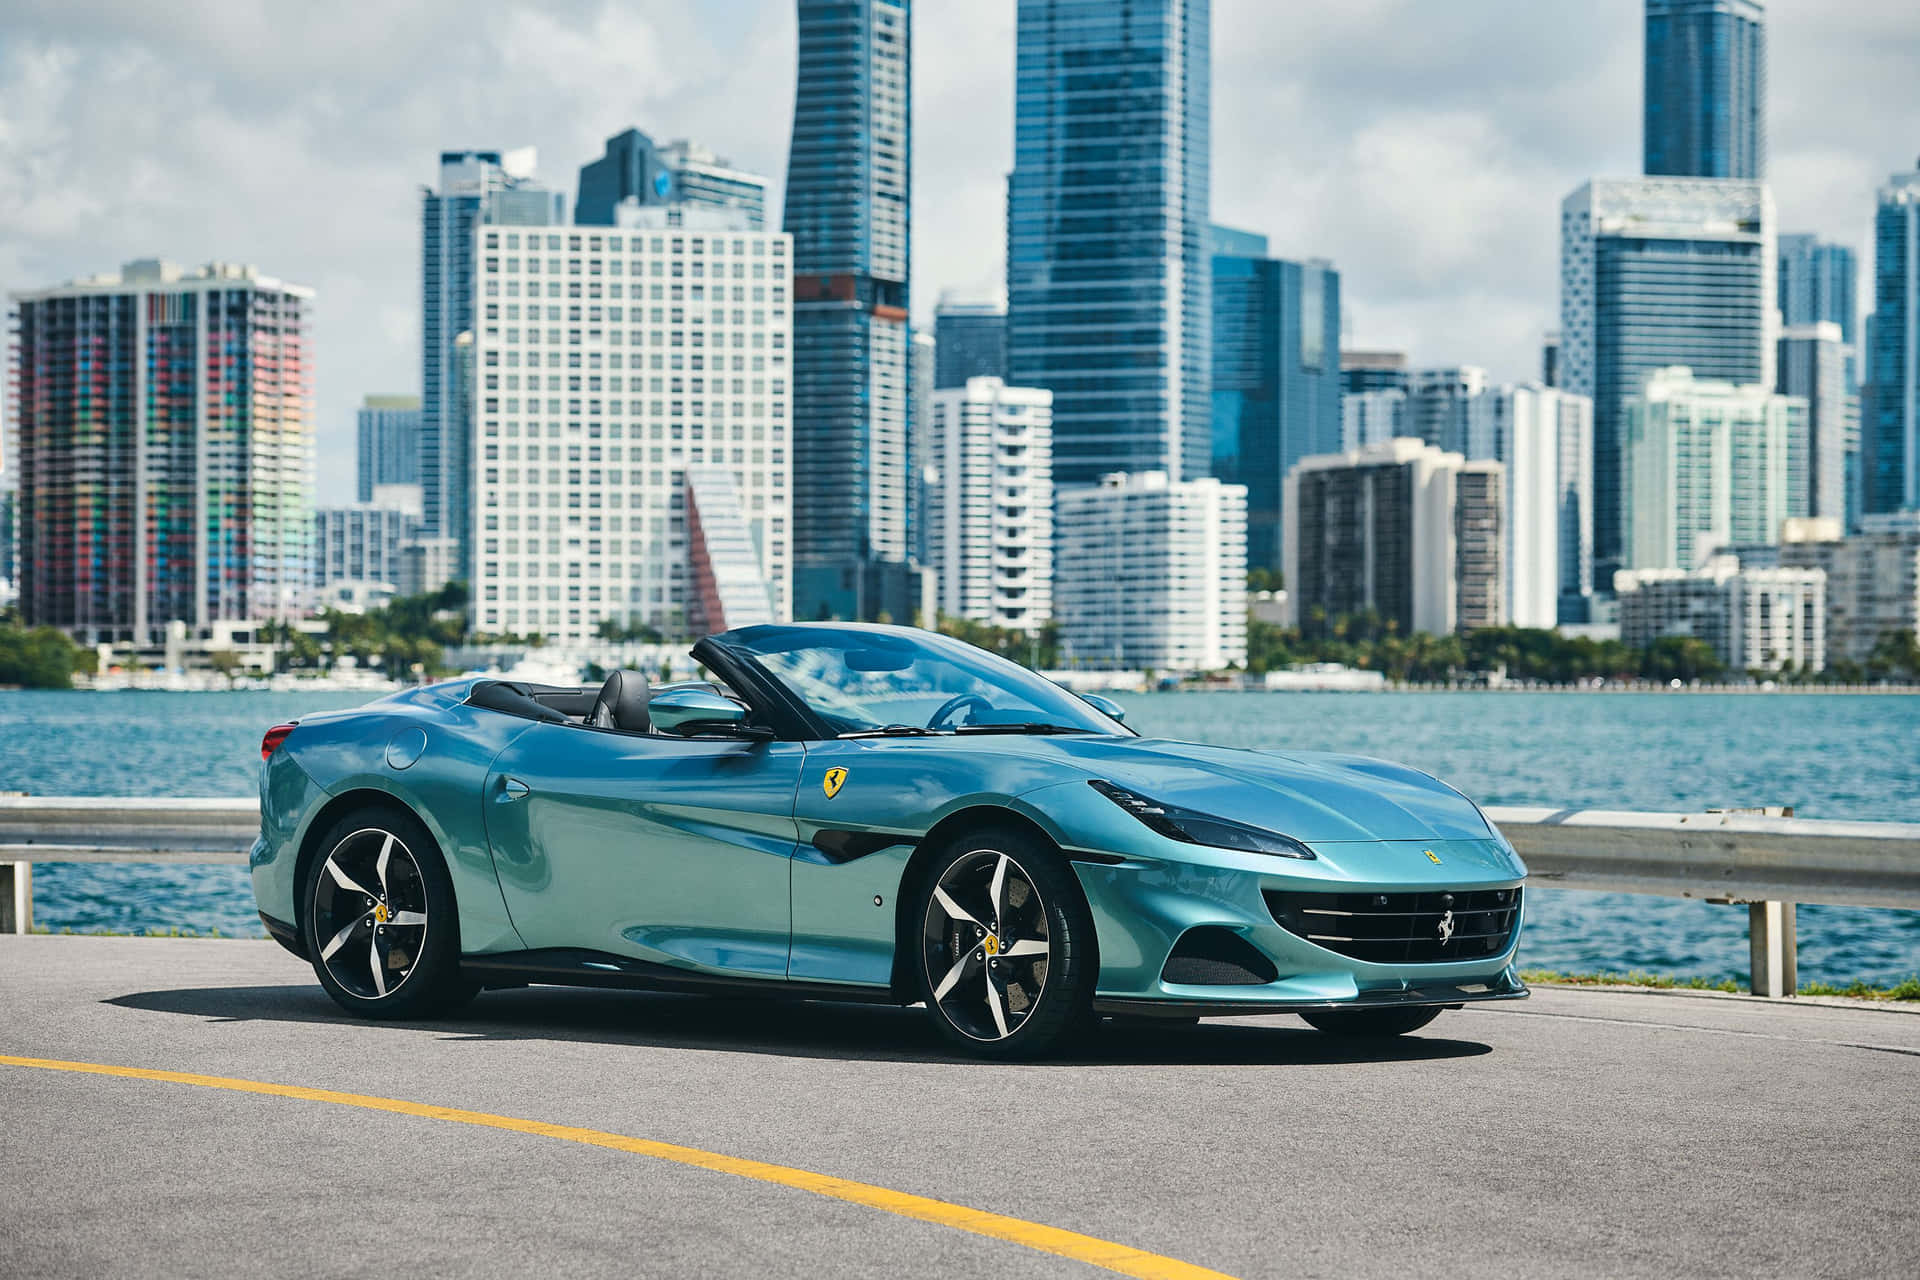 The luxurious Ferrari Portofino amidst breathtaking scenery Wallpaper